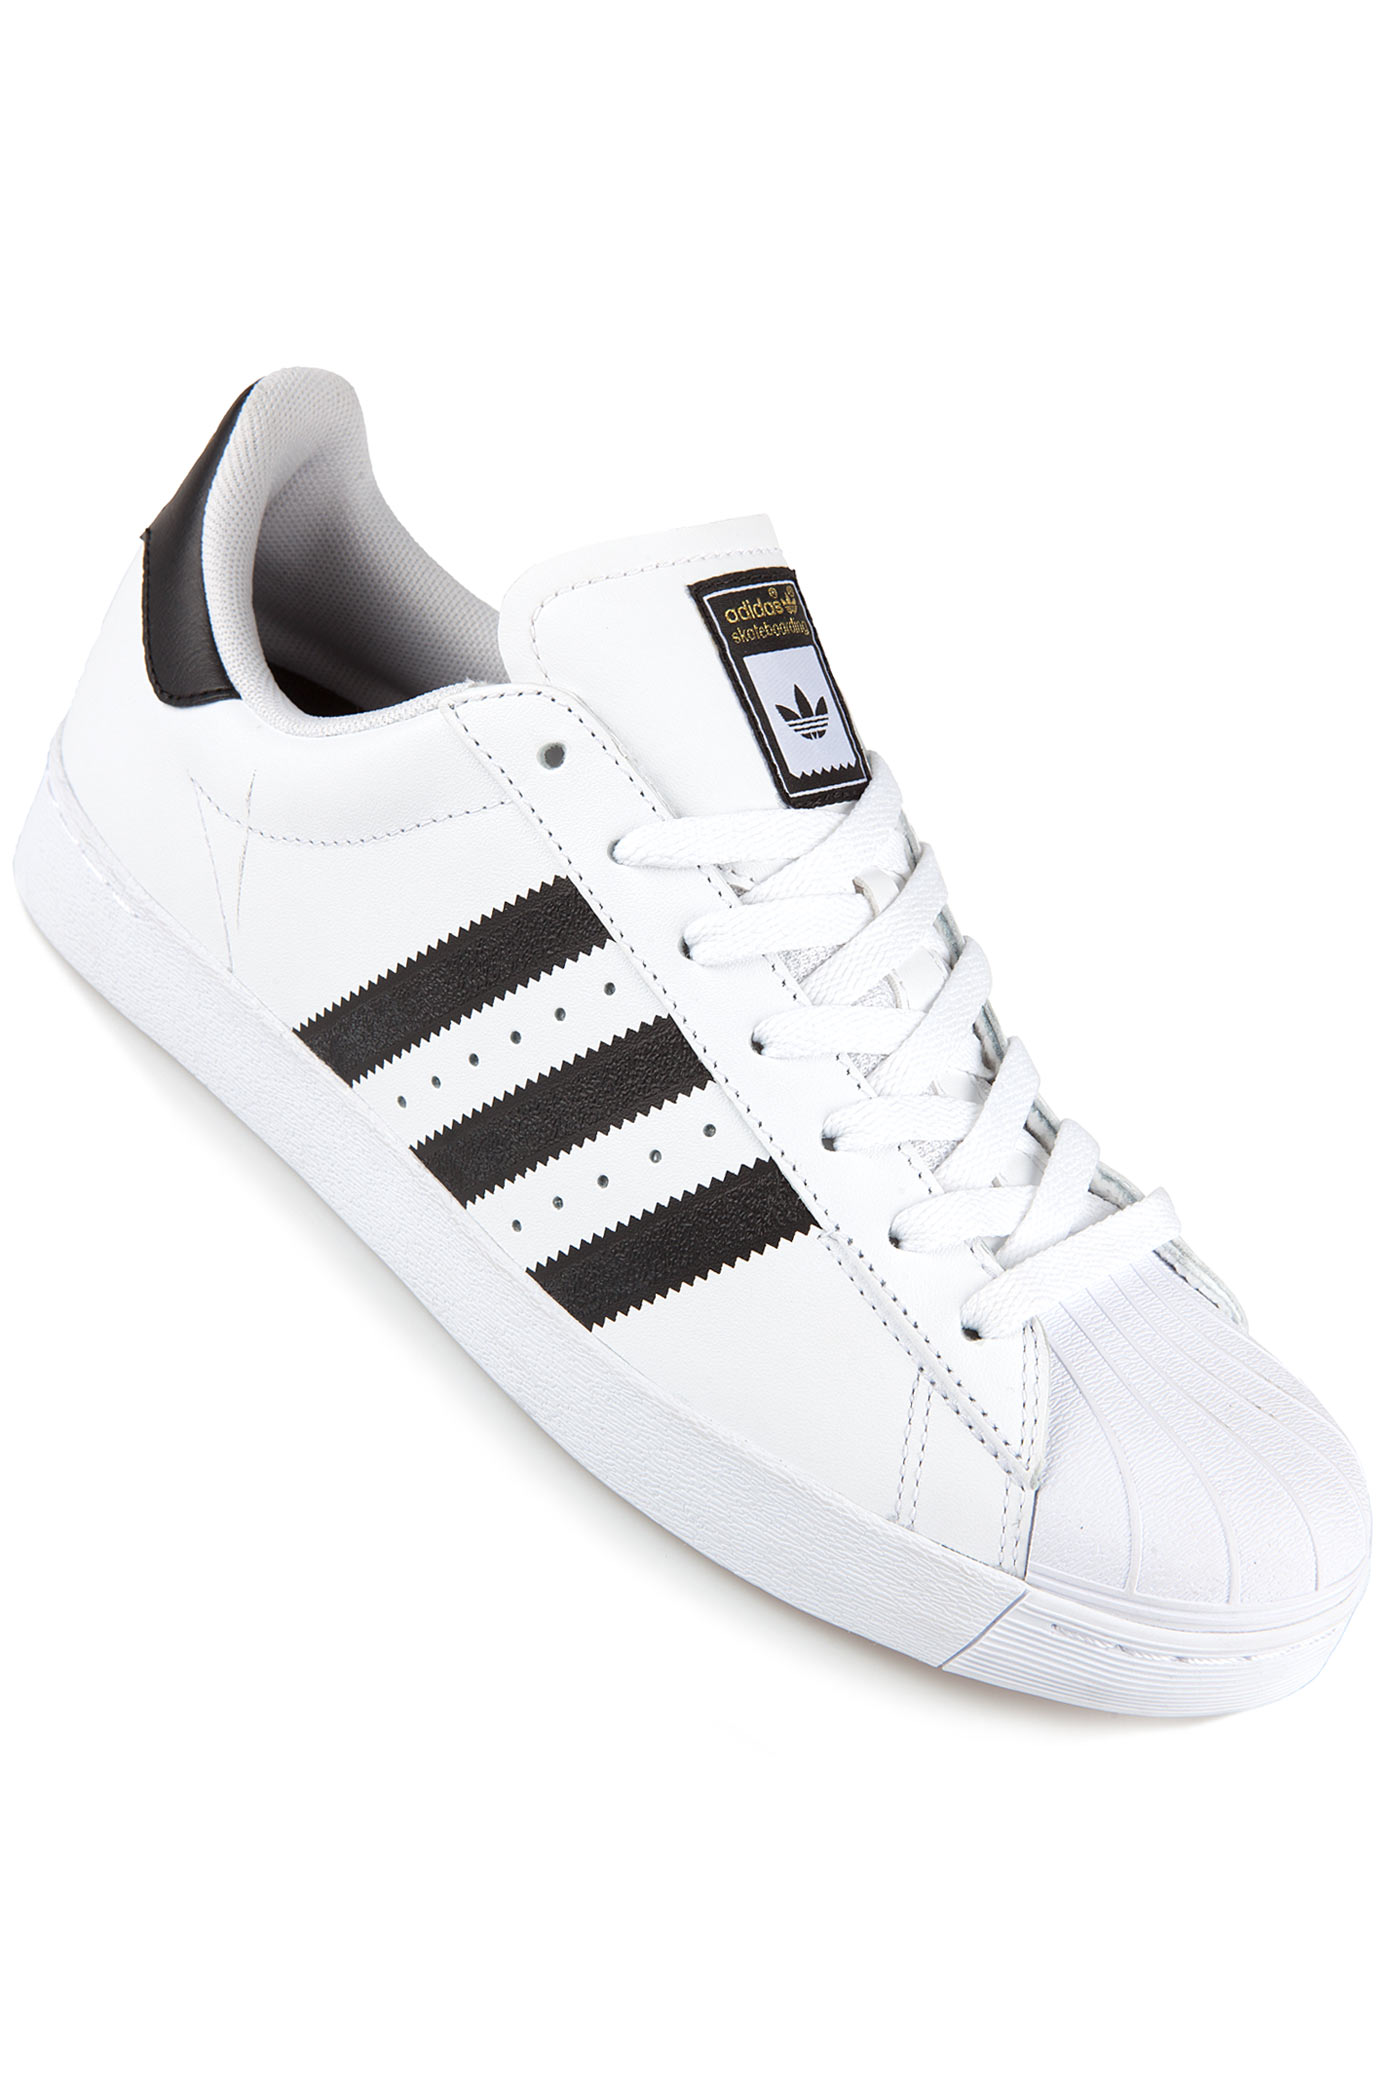 adidas Superstar ADV Vulc Shoe (white) buy at skatedeluxe